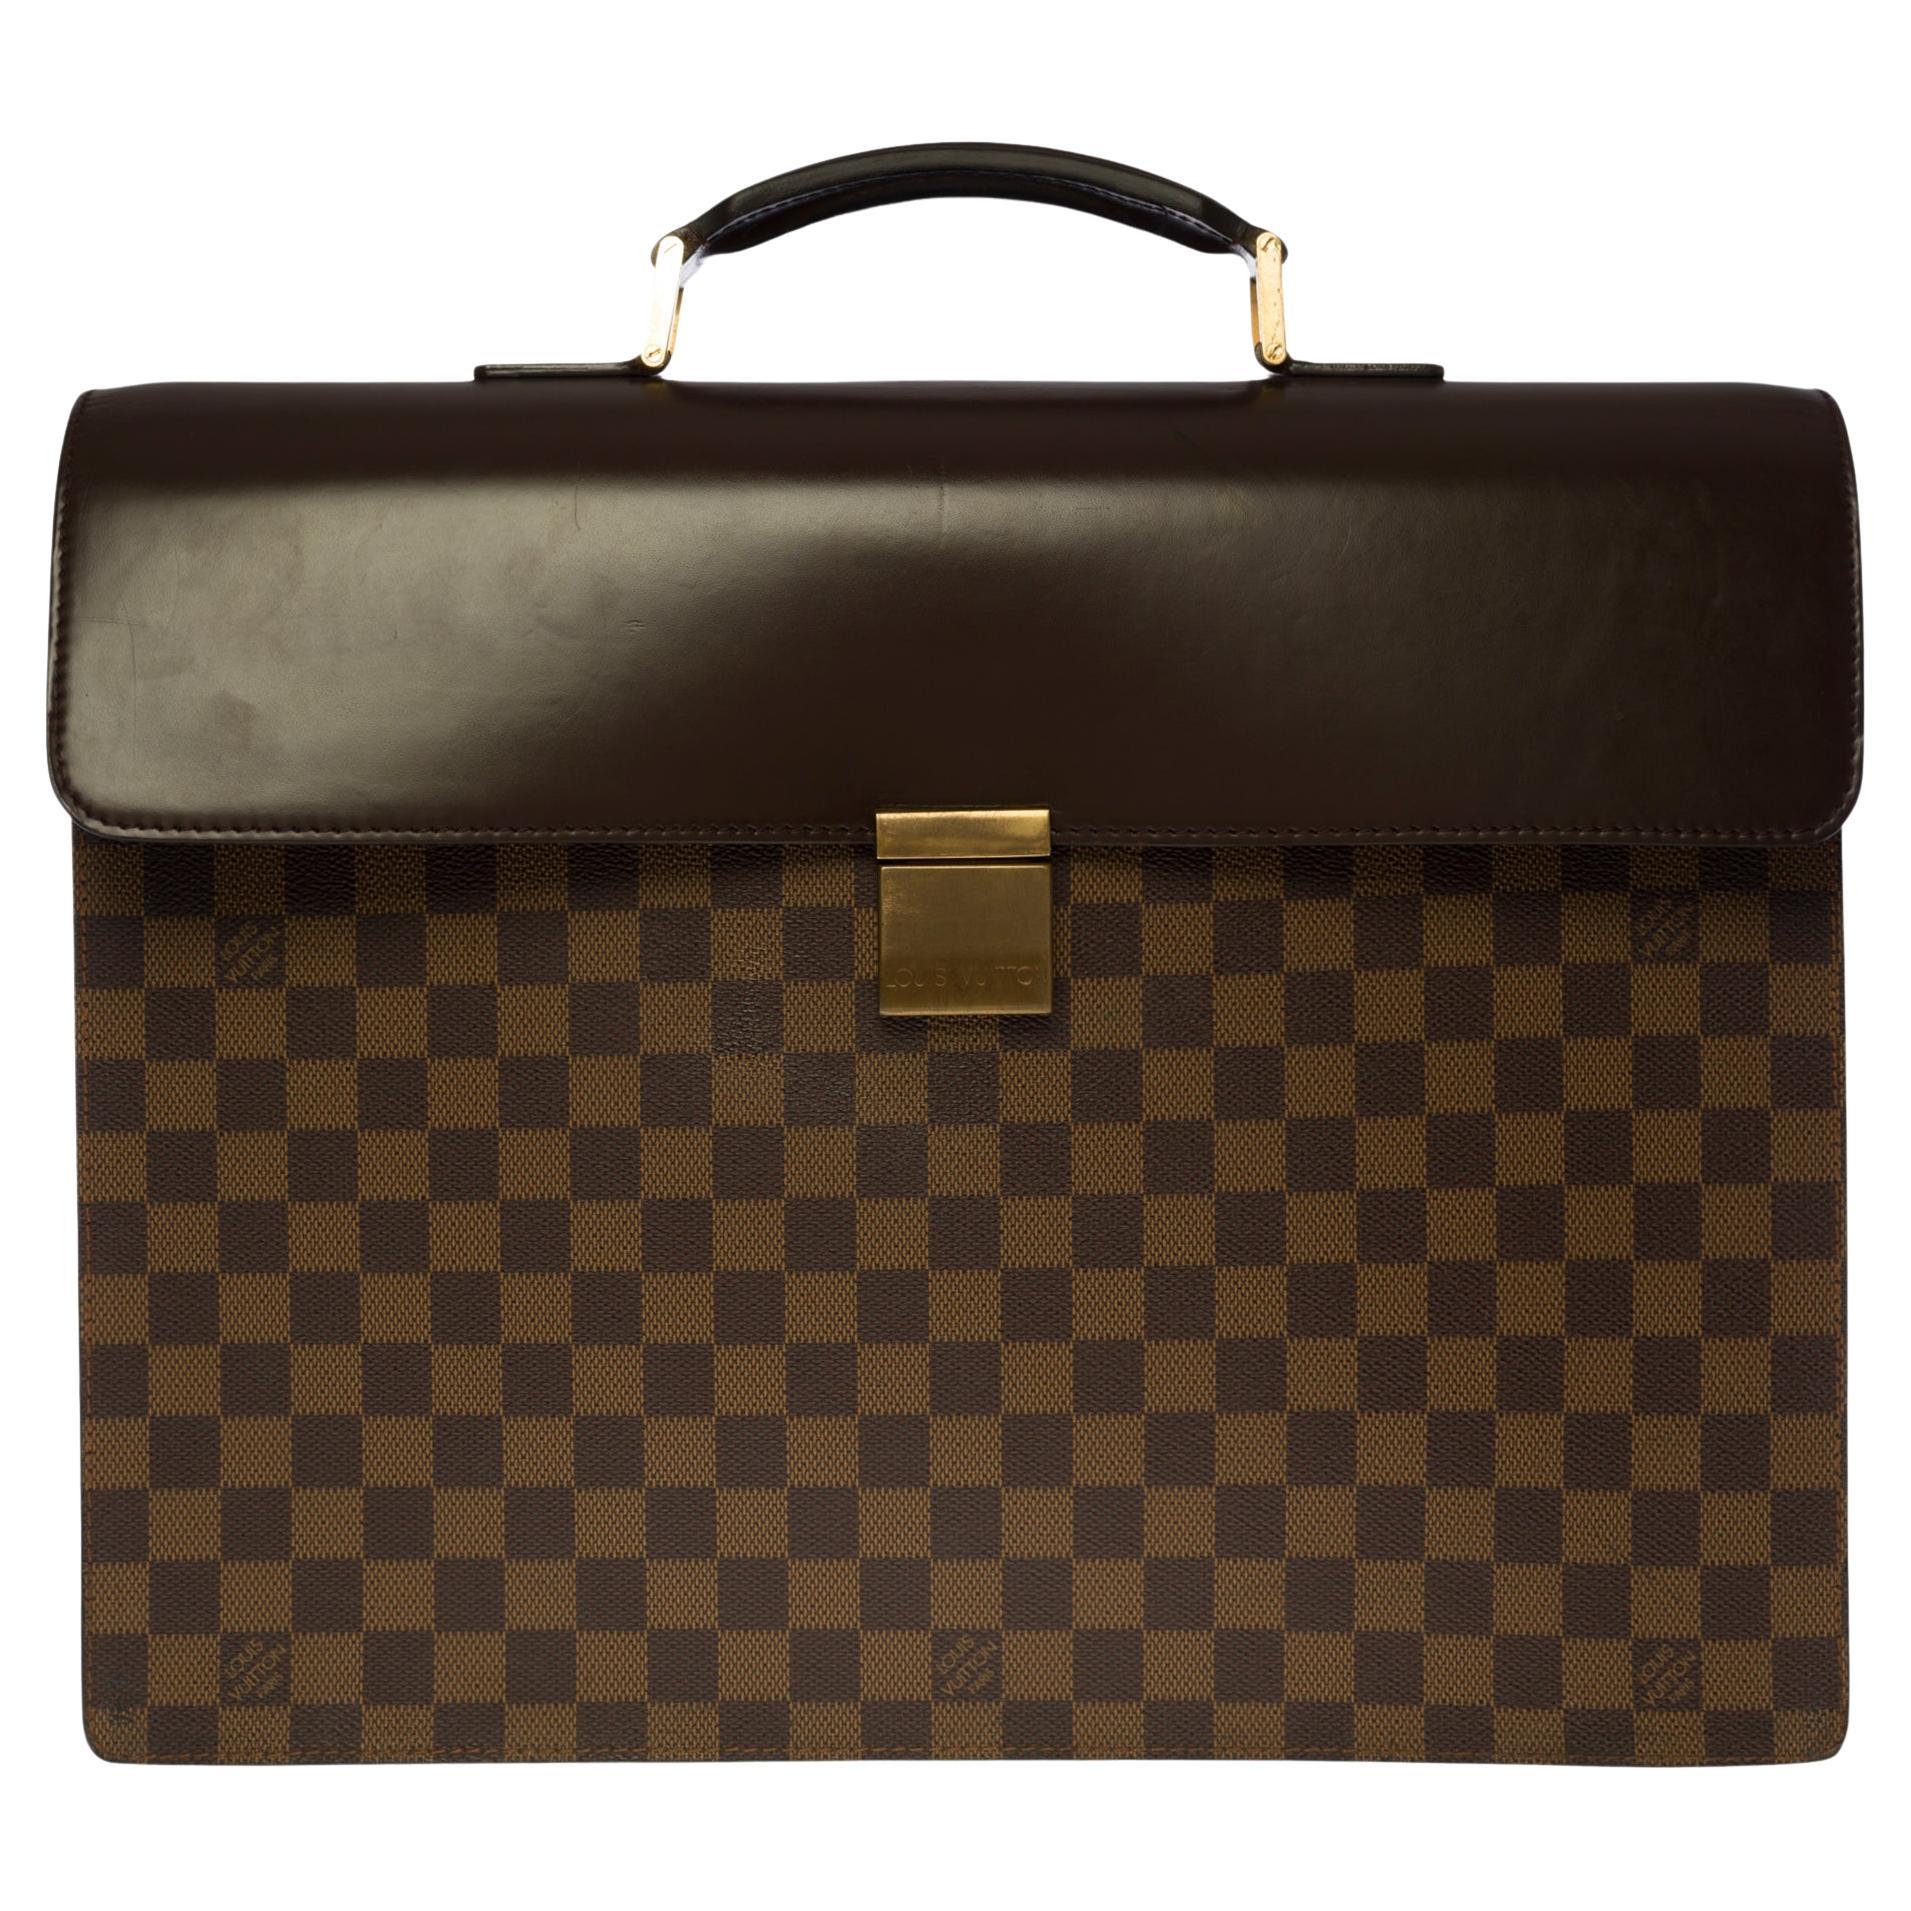 Does Louis Vuitton repair vintage bags? - Questions & Answers